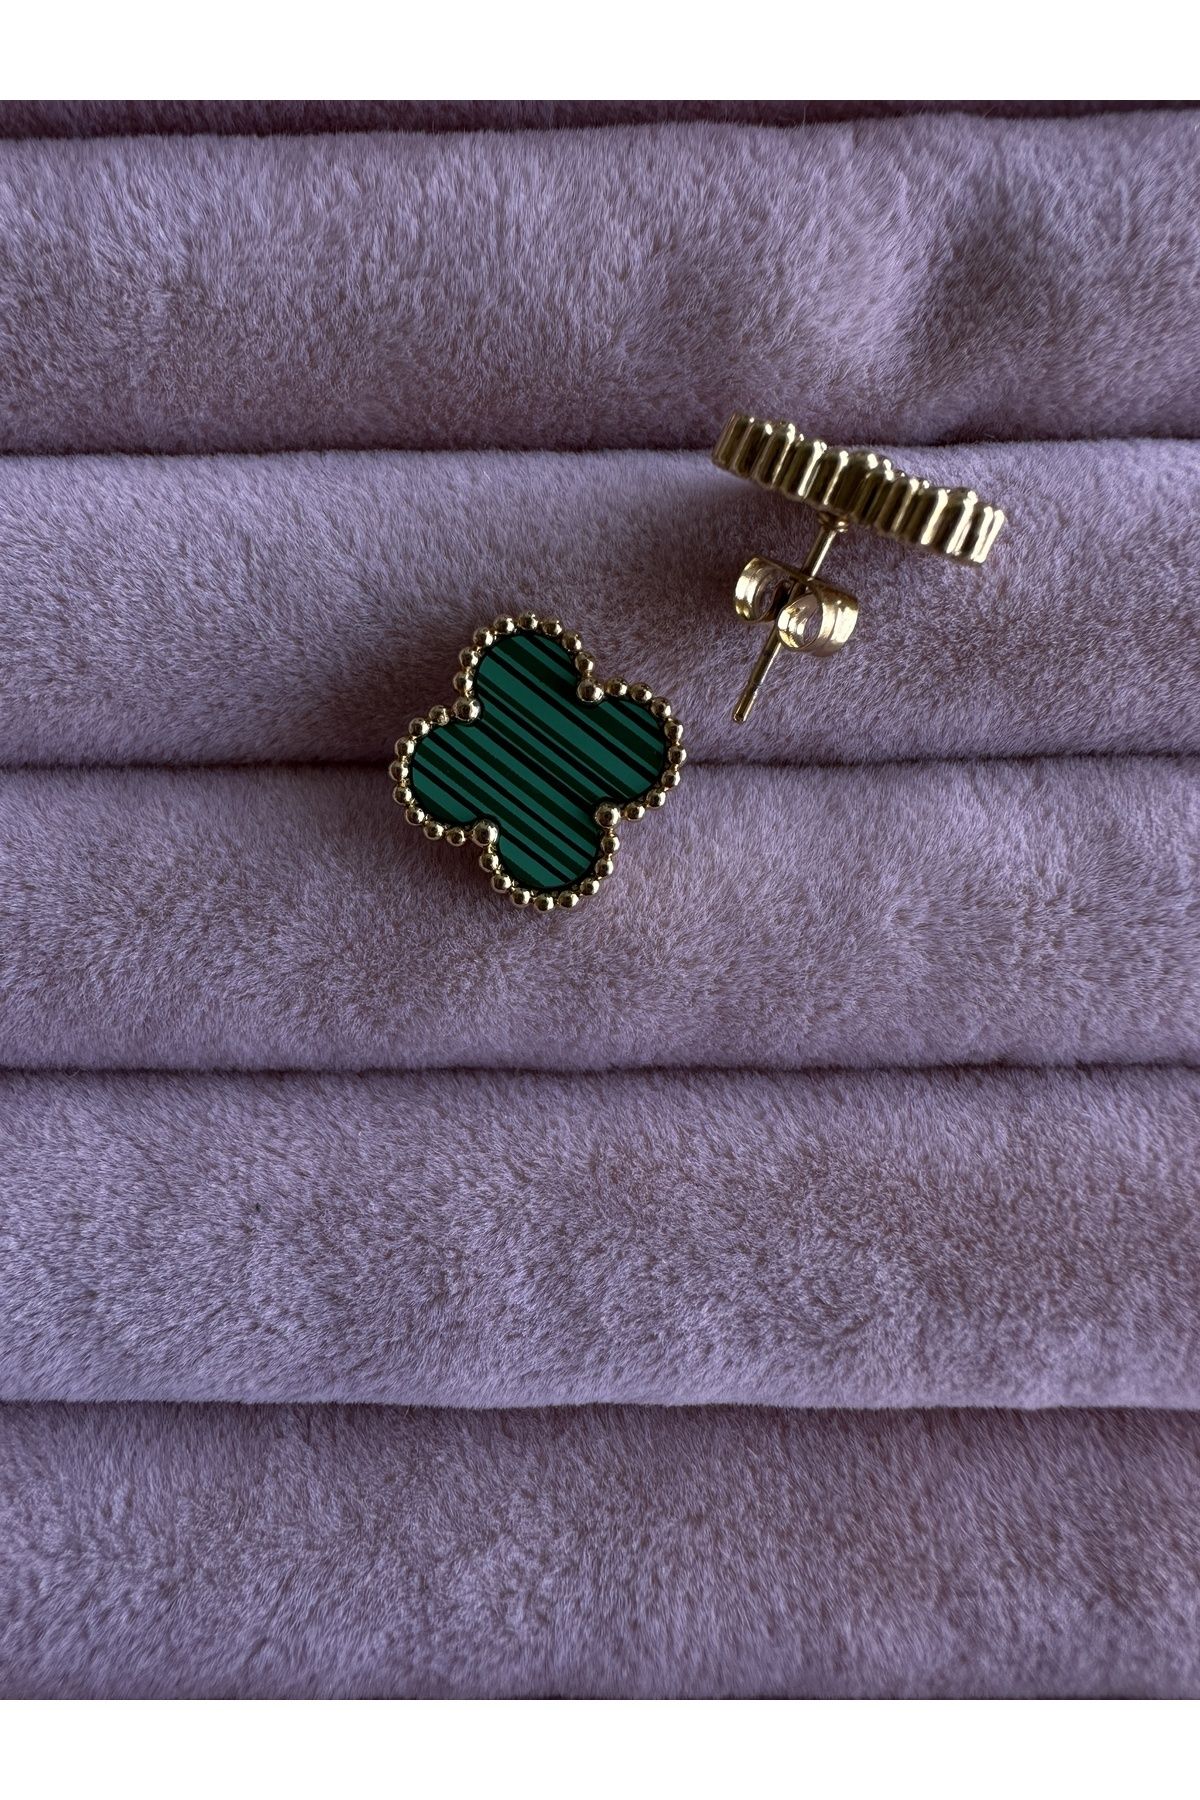 Inure Jewelry Glare Yeşil Yonca Van Cleef Model Çelik Küpe